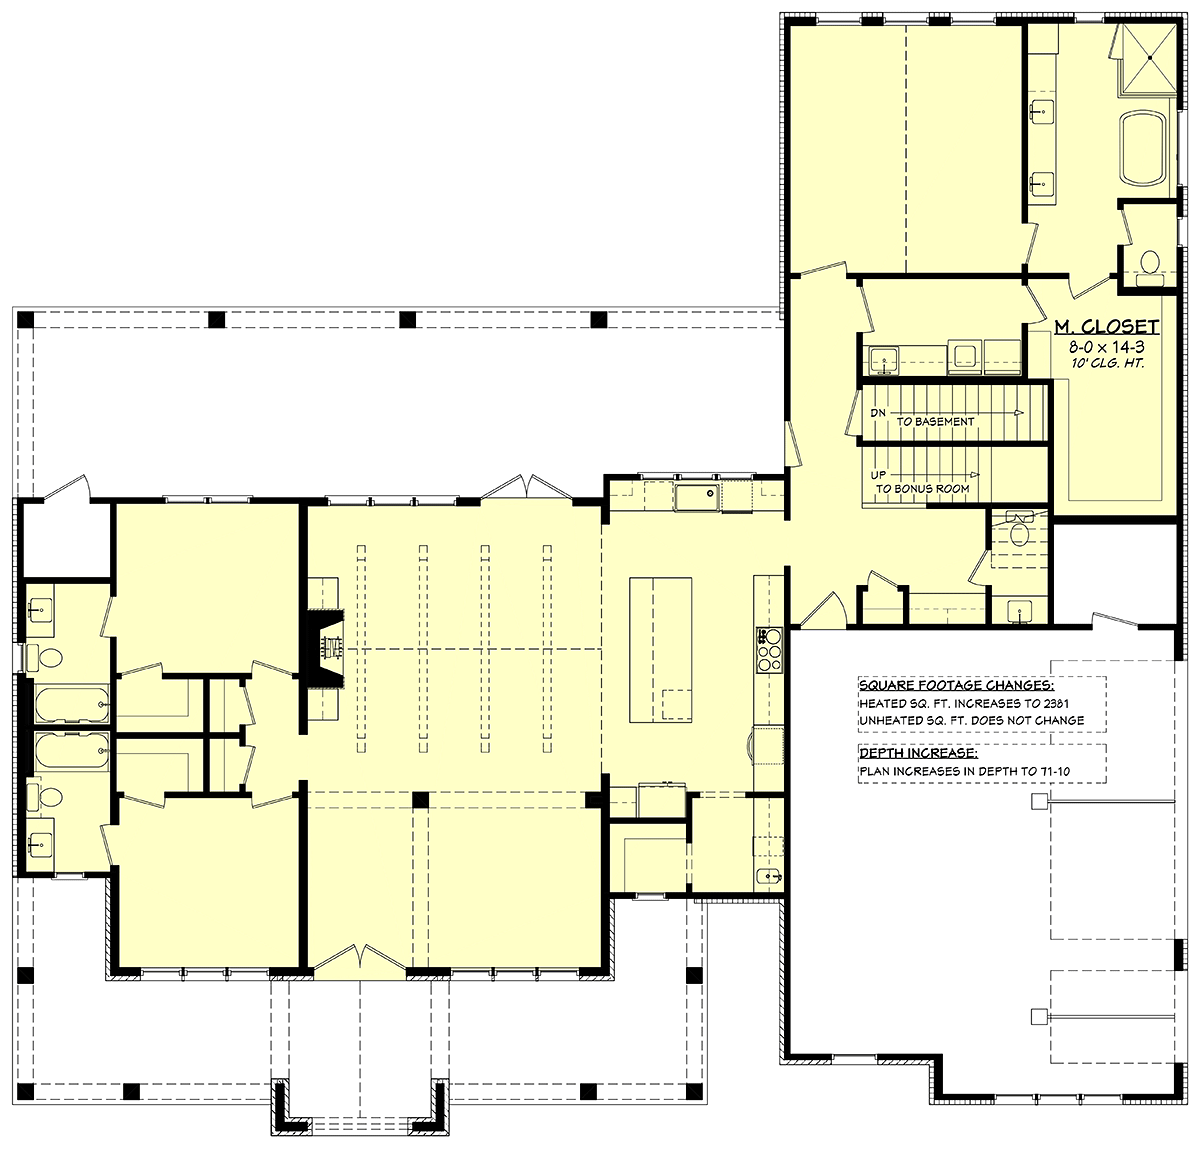 House Plan 82919 Alternate Level One